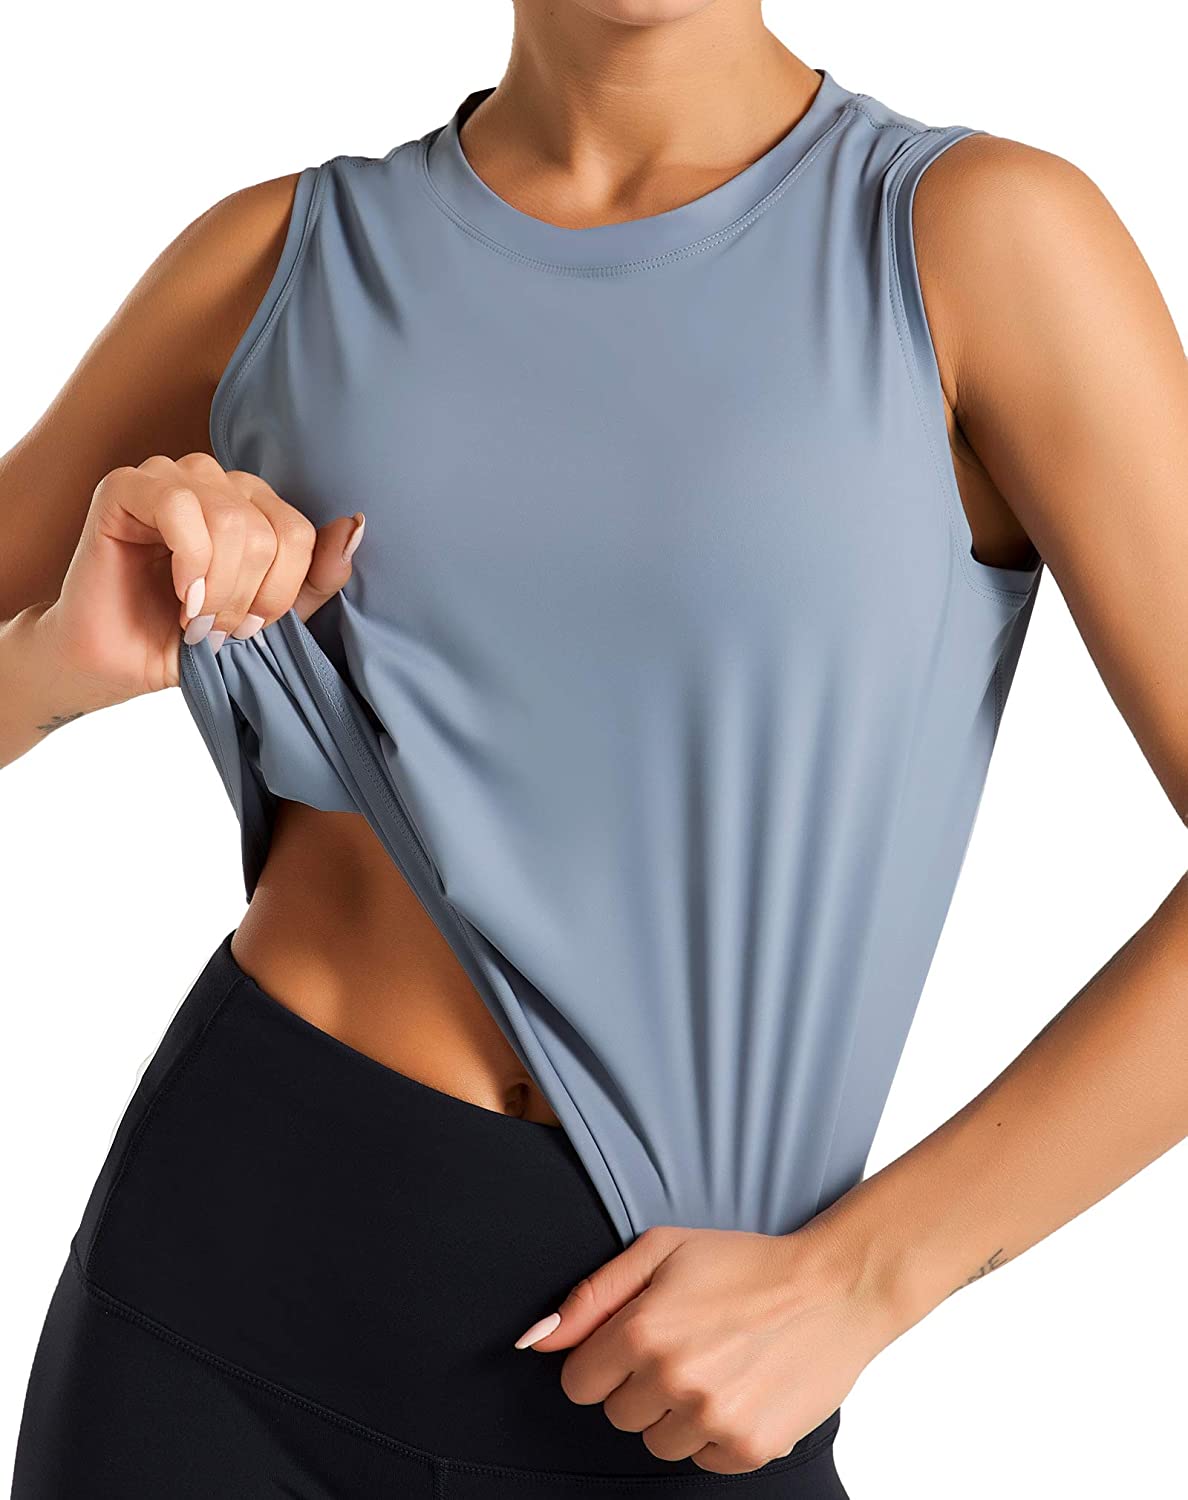 Dragon Fit Athletic Tank Tops for Women Sleeveless Workout Cool T-Shirt Running Short Tank Crop Tops 